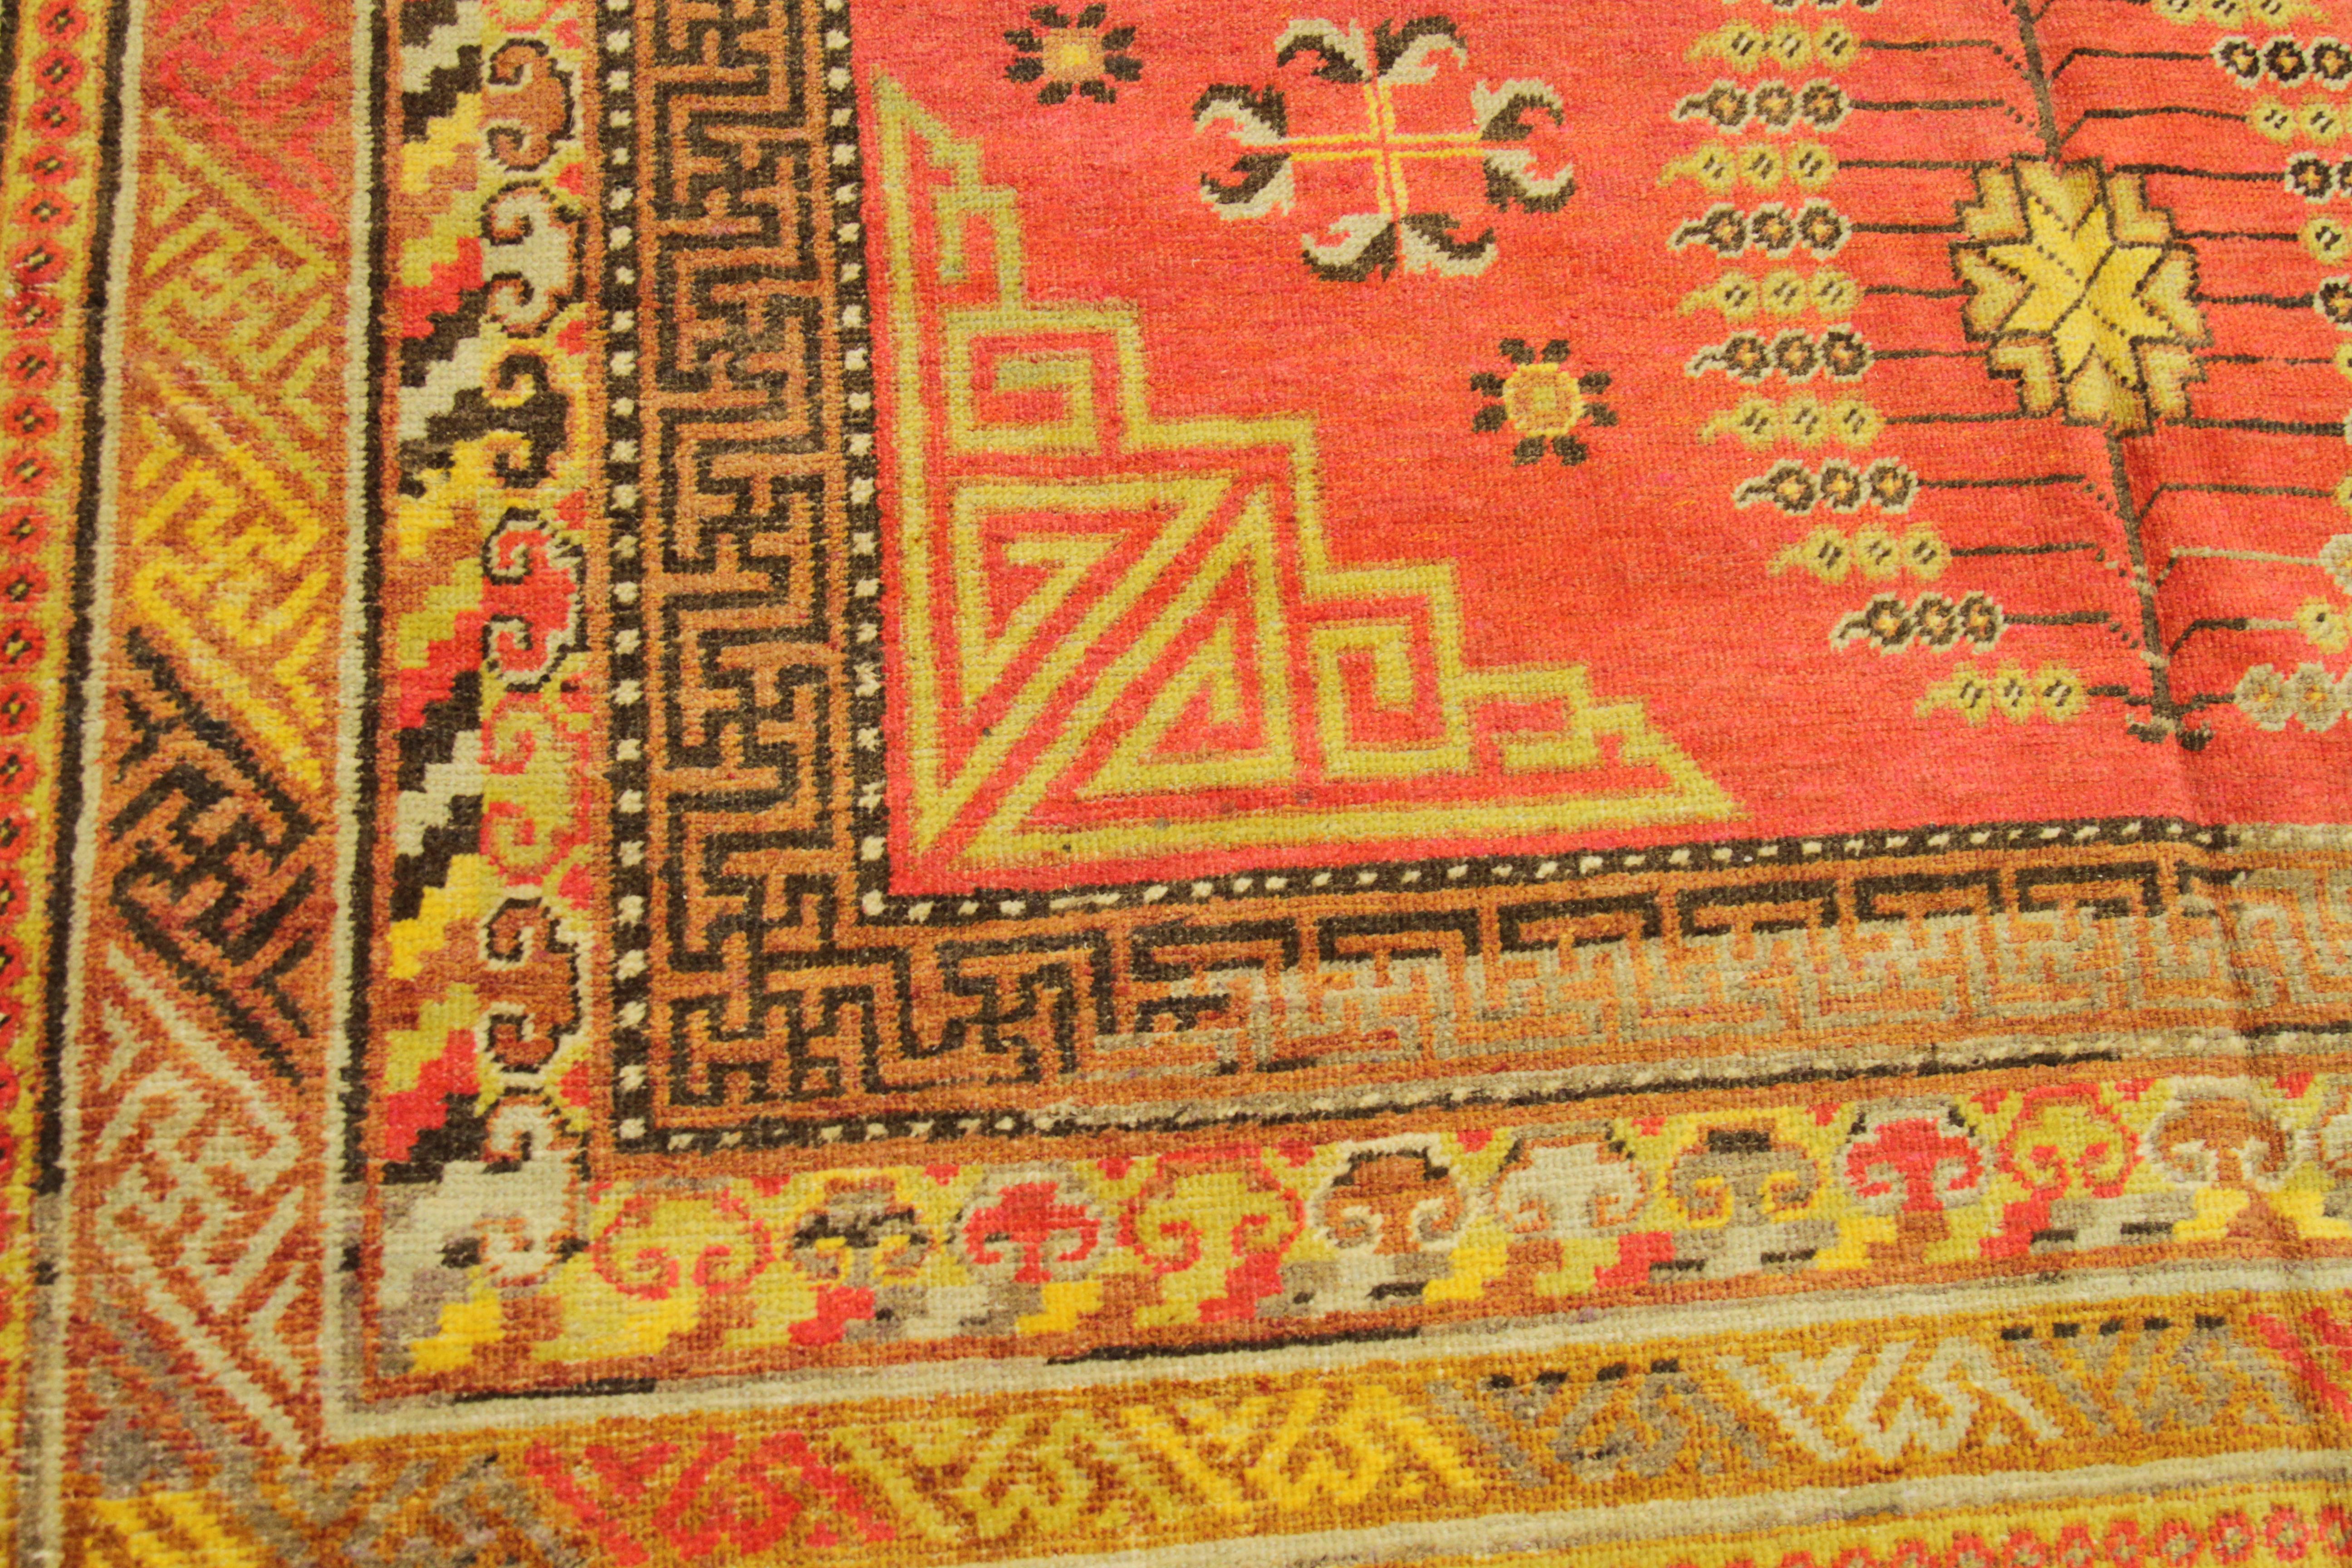 Wool Antique Central Asian Rug Khotan Design with Unique Oriental Patterns circa 1920 For Sale